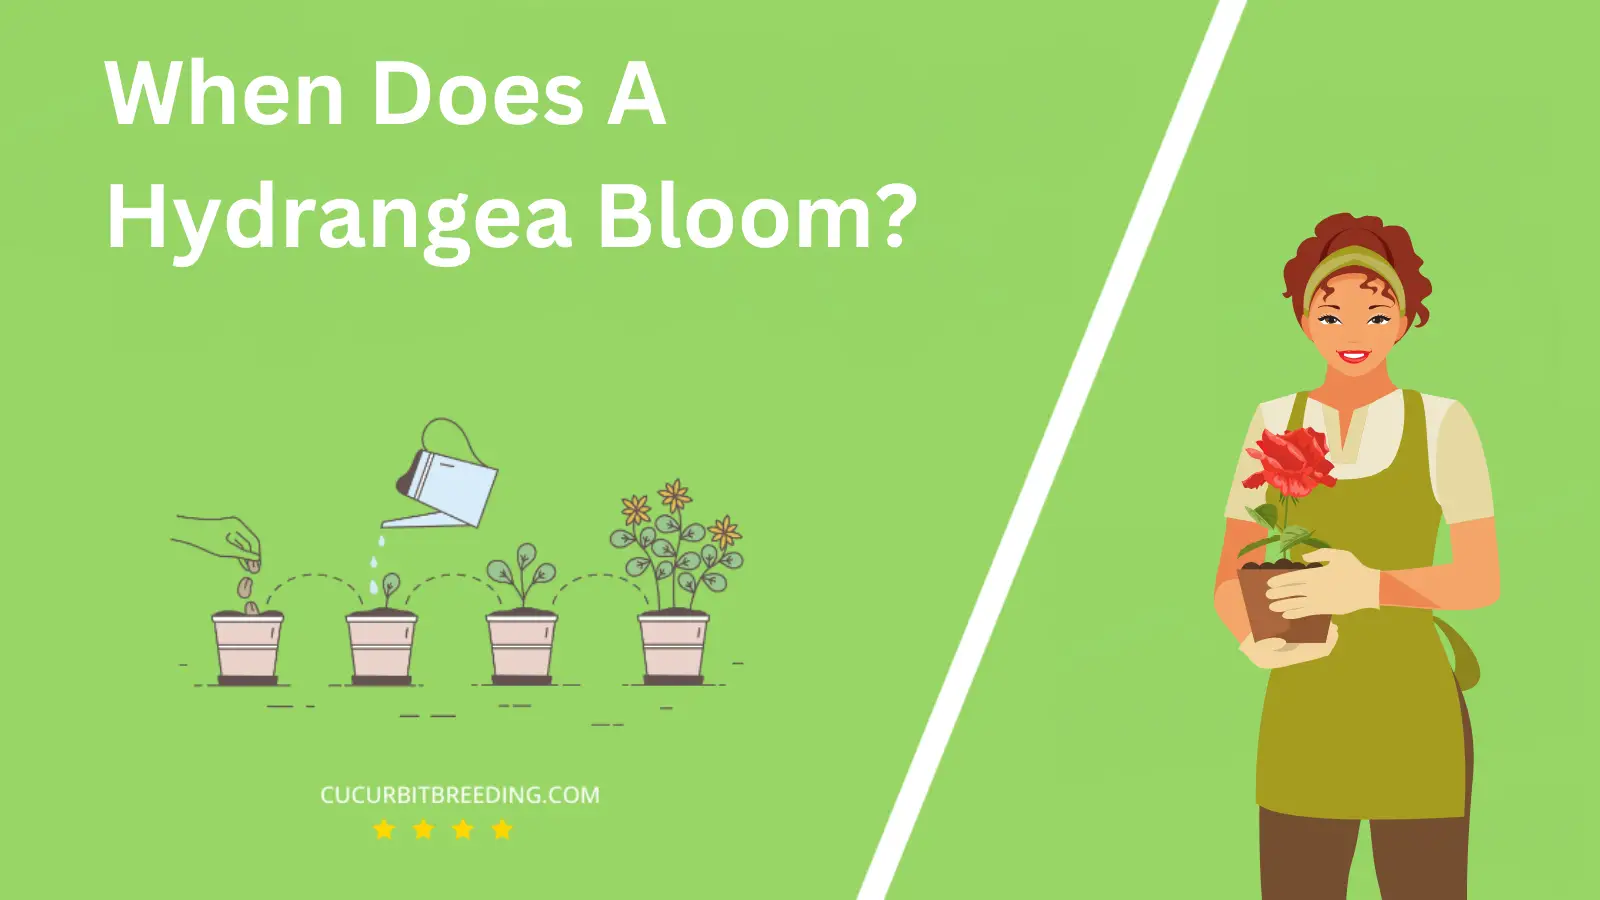 When Does A Hydrangea Bloom?